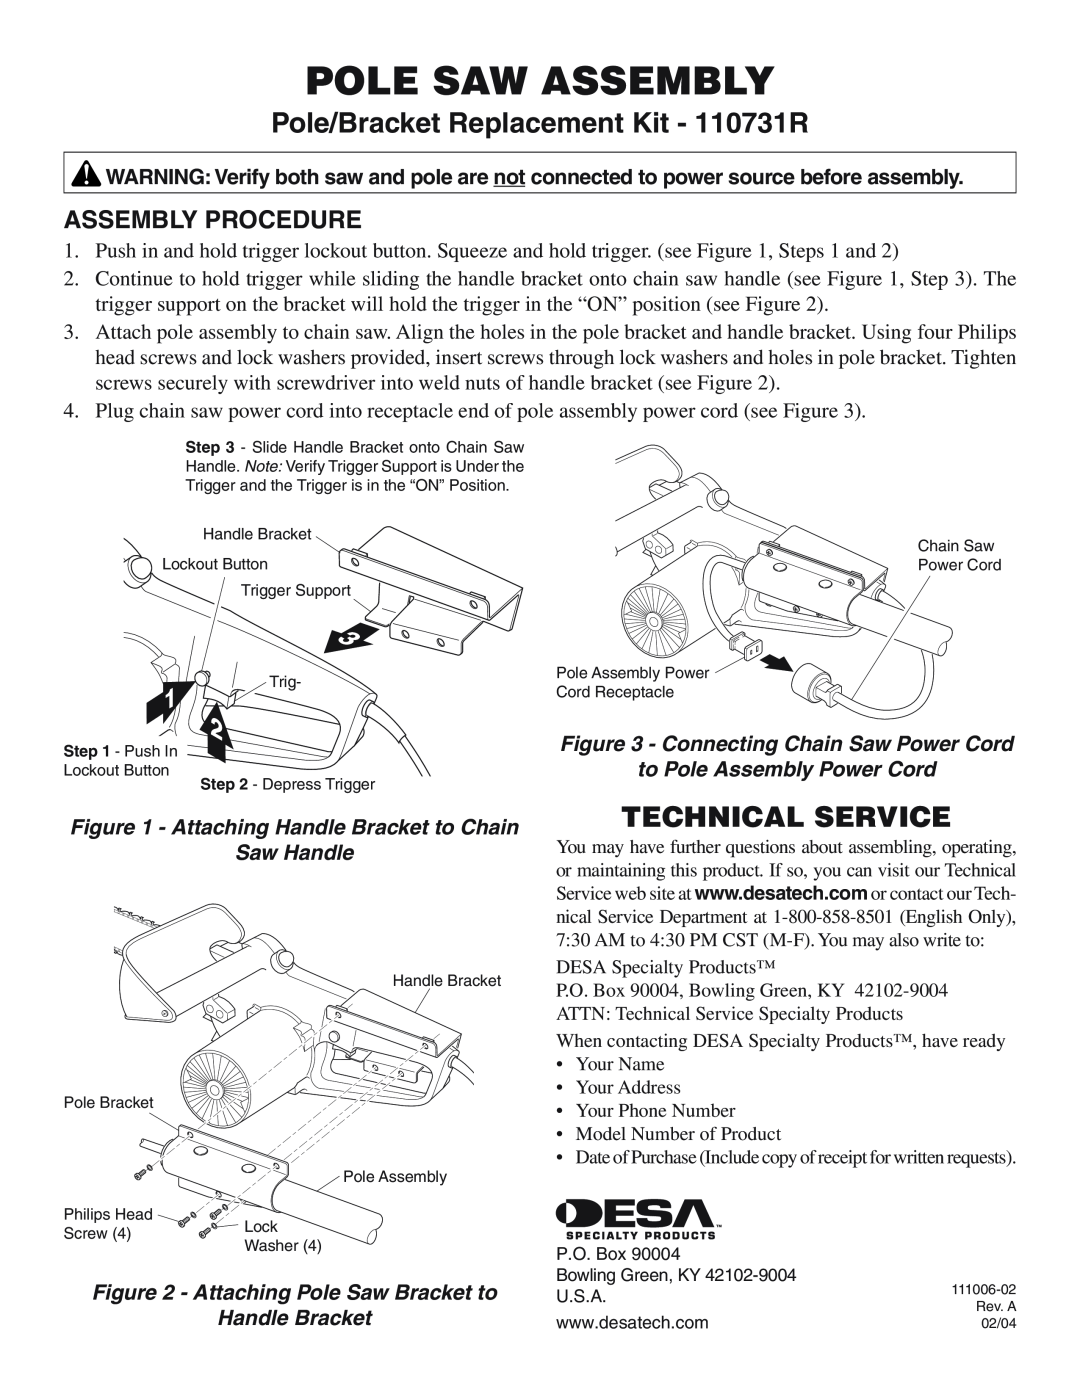 Desa manual Pole Saw Assembly, Pole/Bracket Replacement Kit - 110731R, Technical Service, Assembly Procedure 